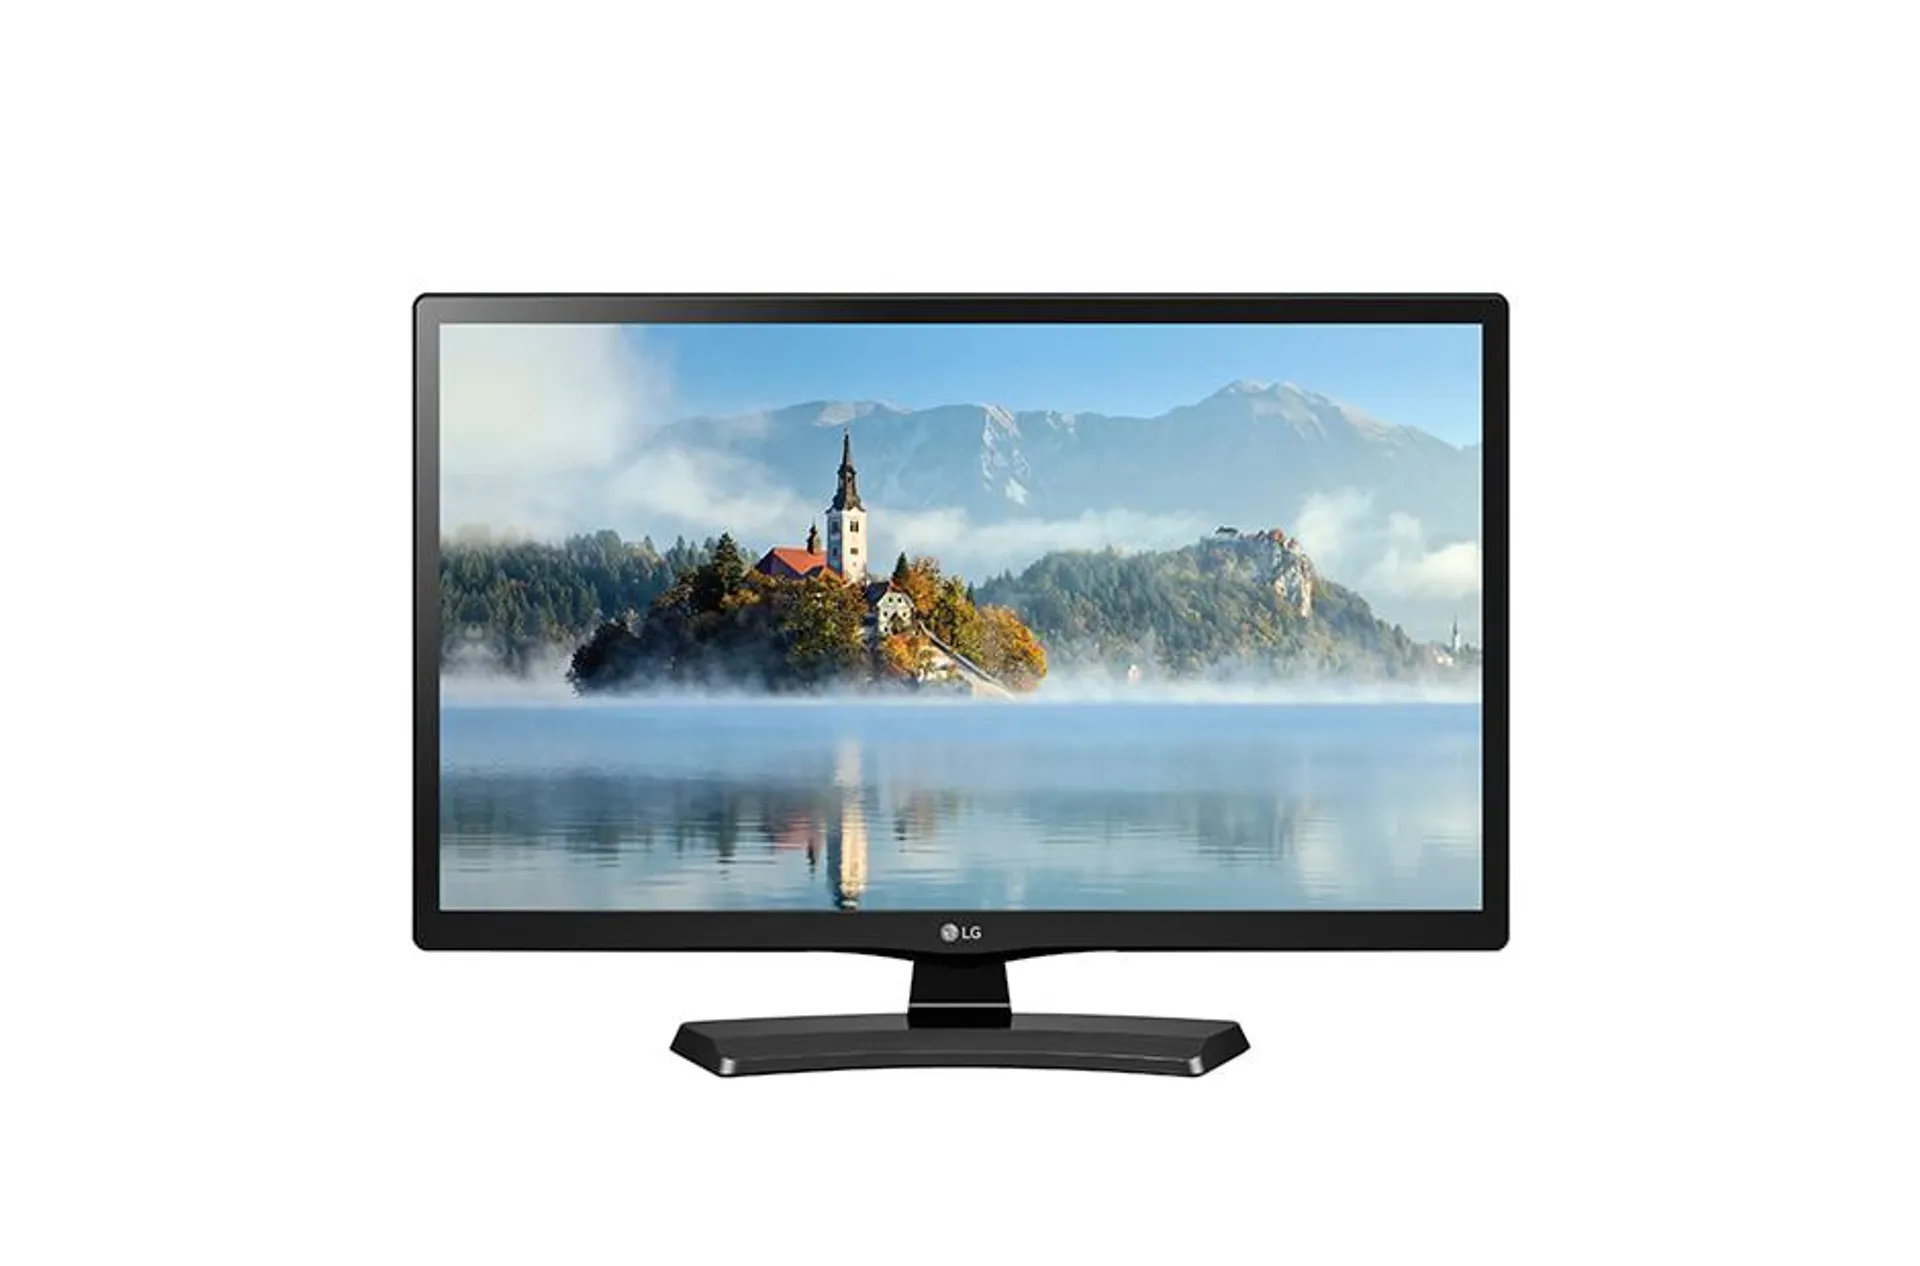 HD 720p LED TV - 24'' Class (23.6'' Diag)